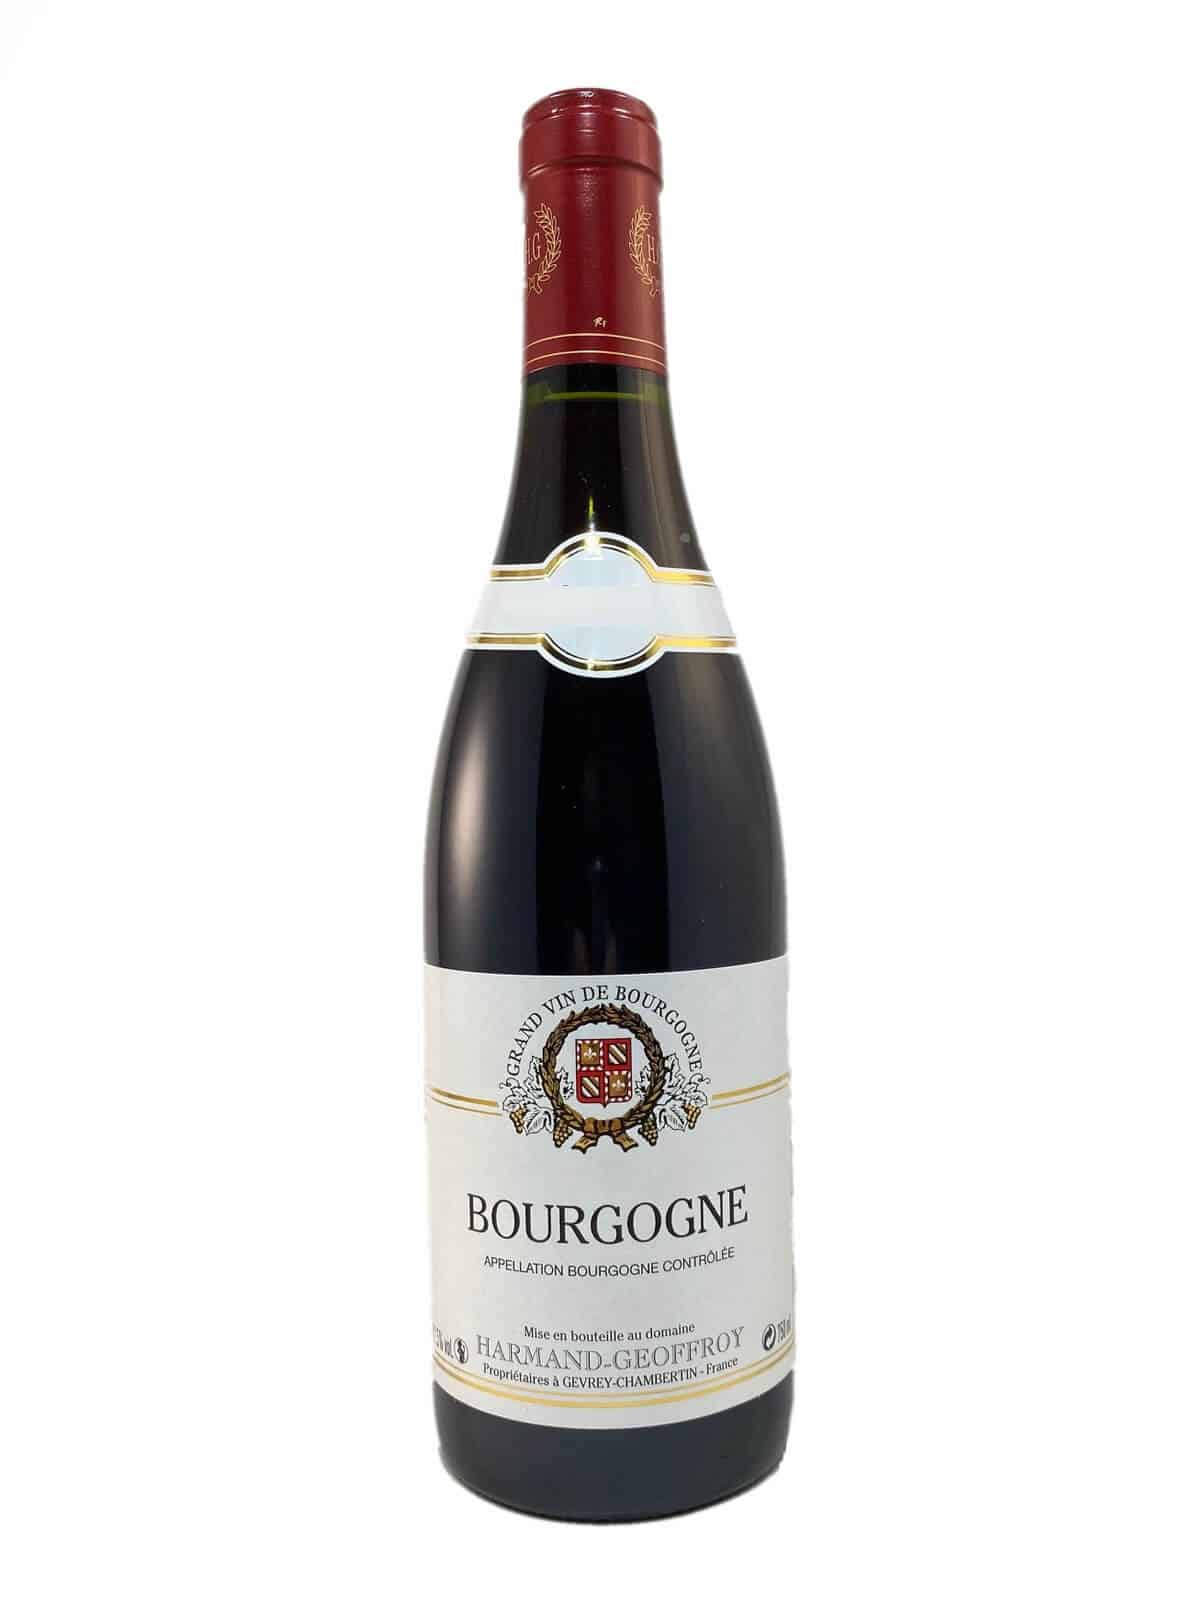 BOURGOGNE Domaine HARMAND GEOFFROY grand vin de bourgogne rouge pas cher